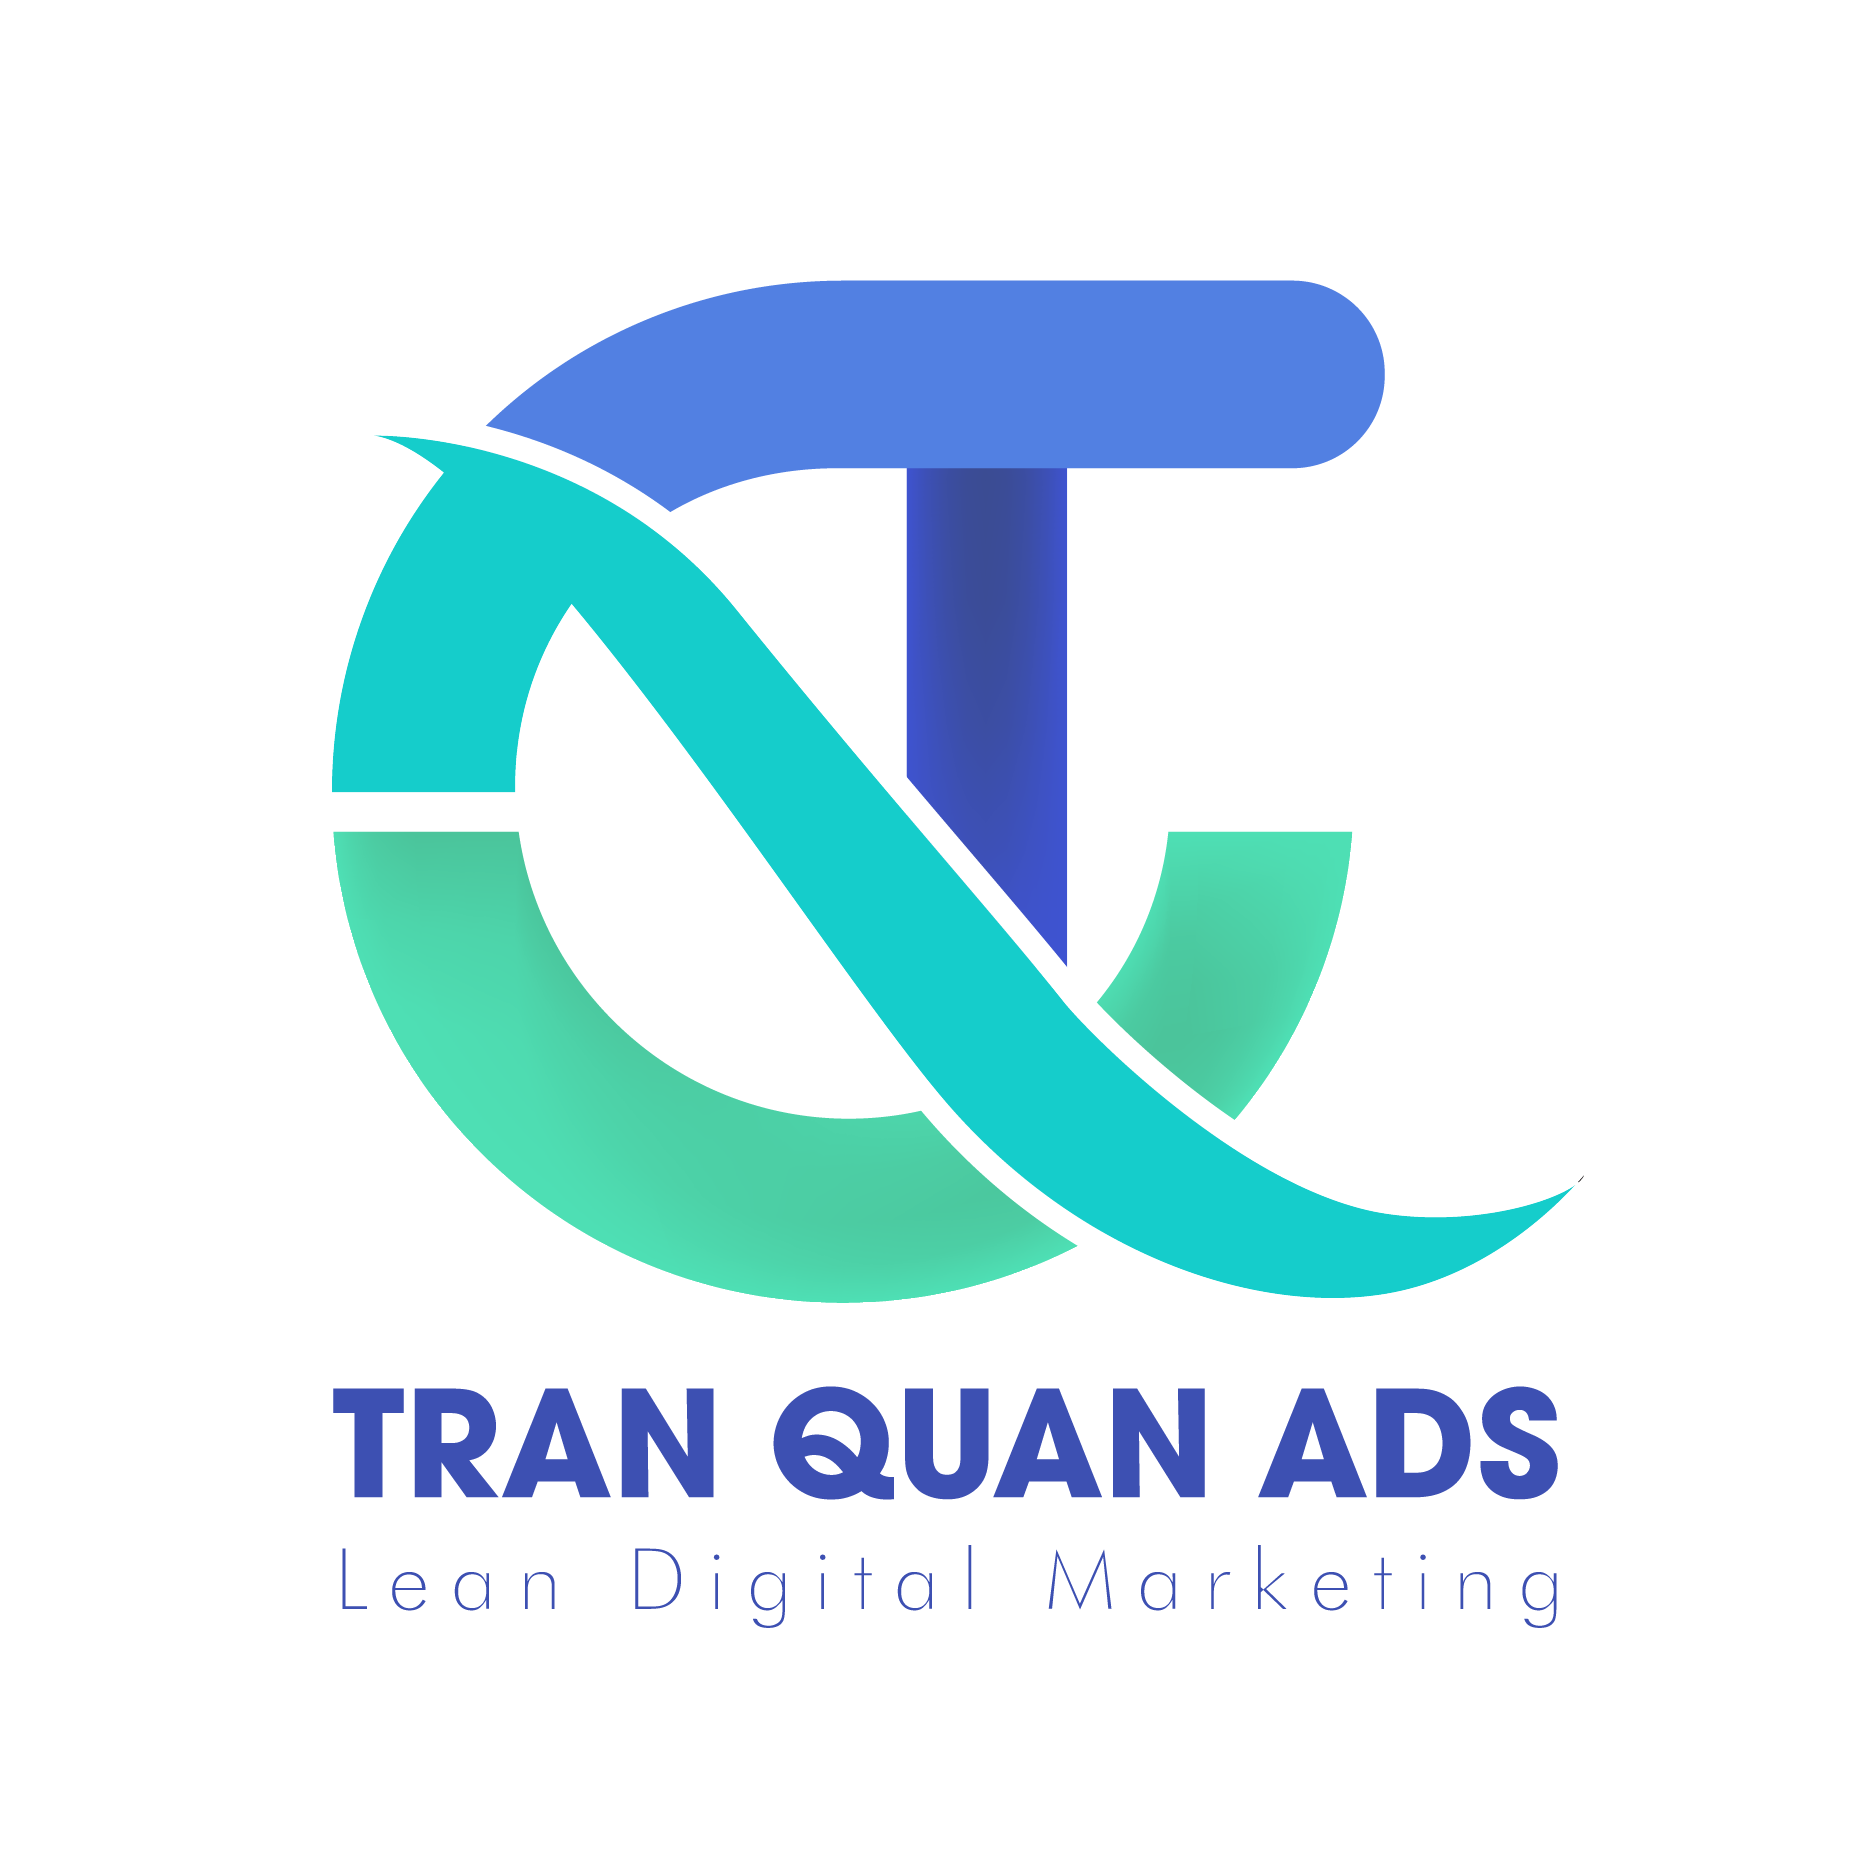 TRAN_QUAN_ADS-02